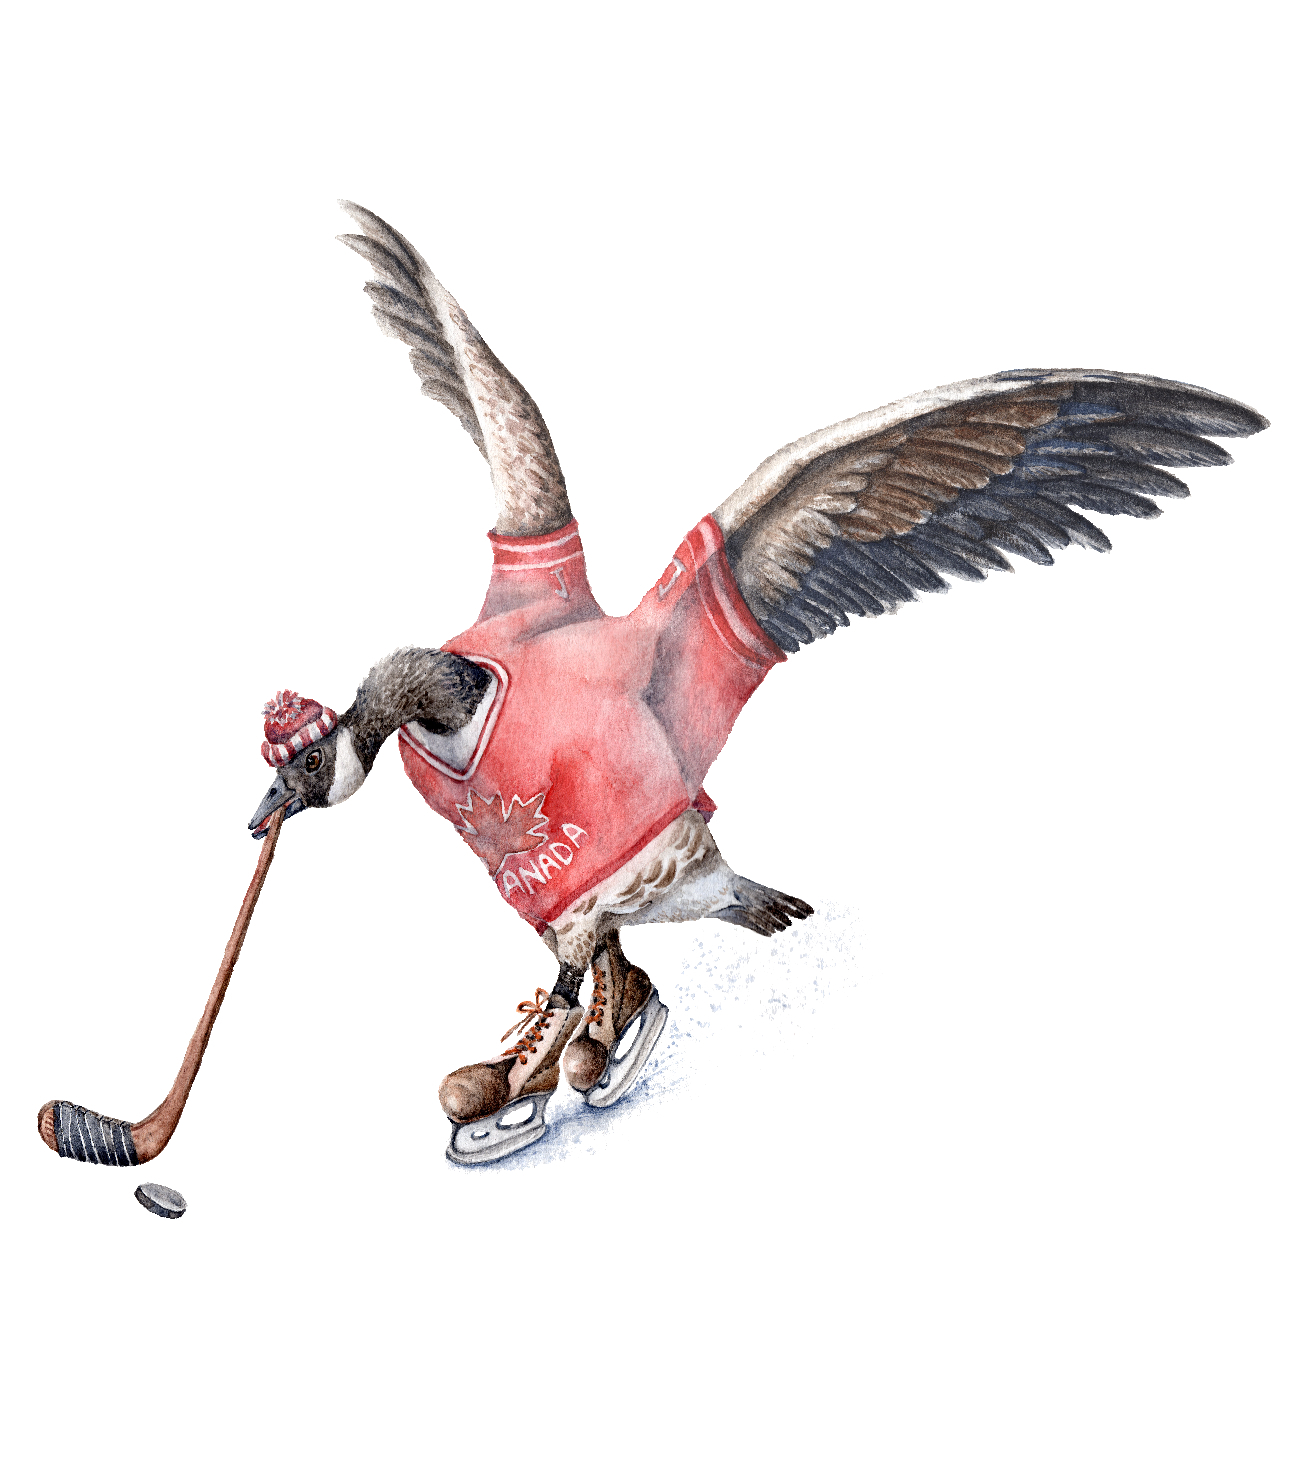 Canada Goose Playing Hockey